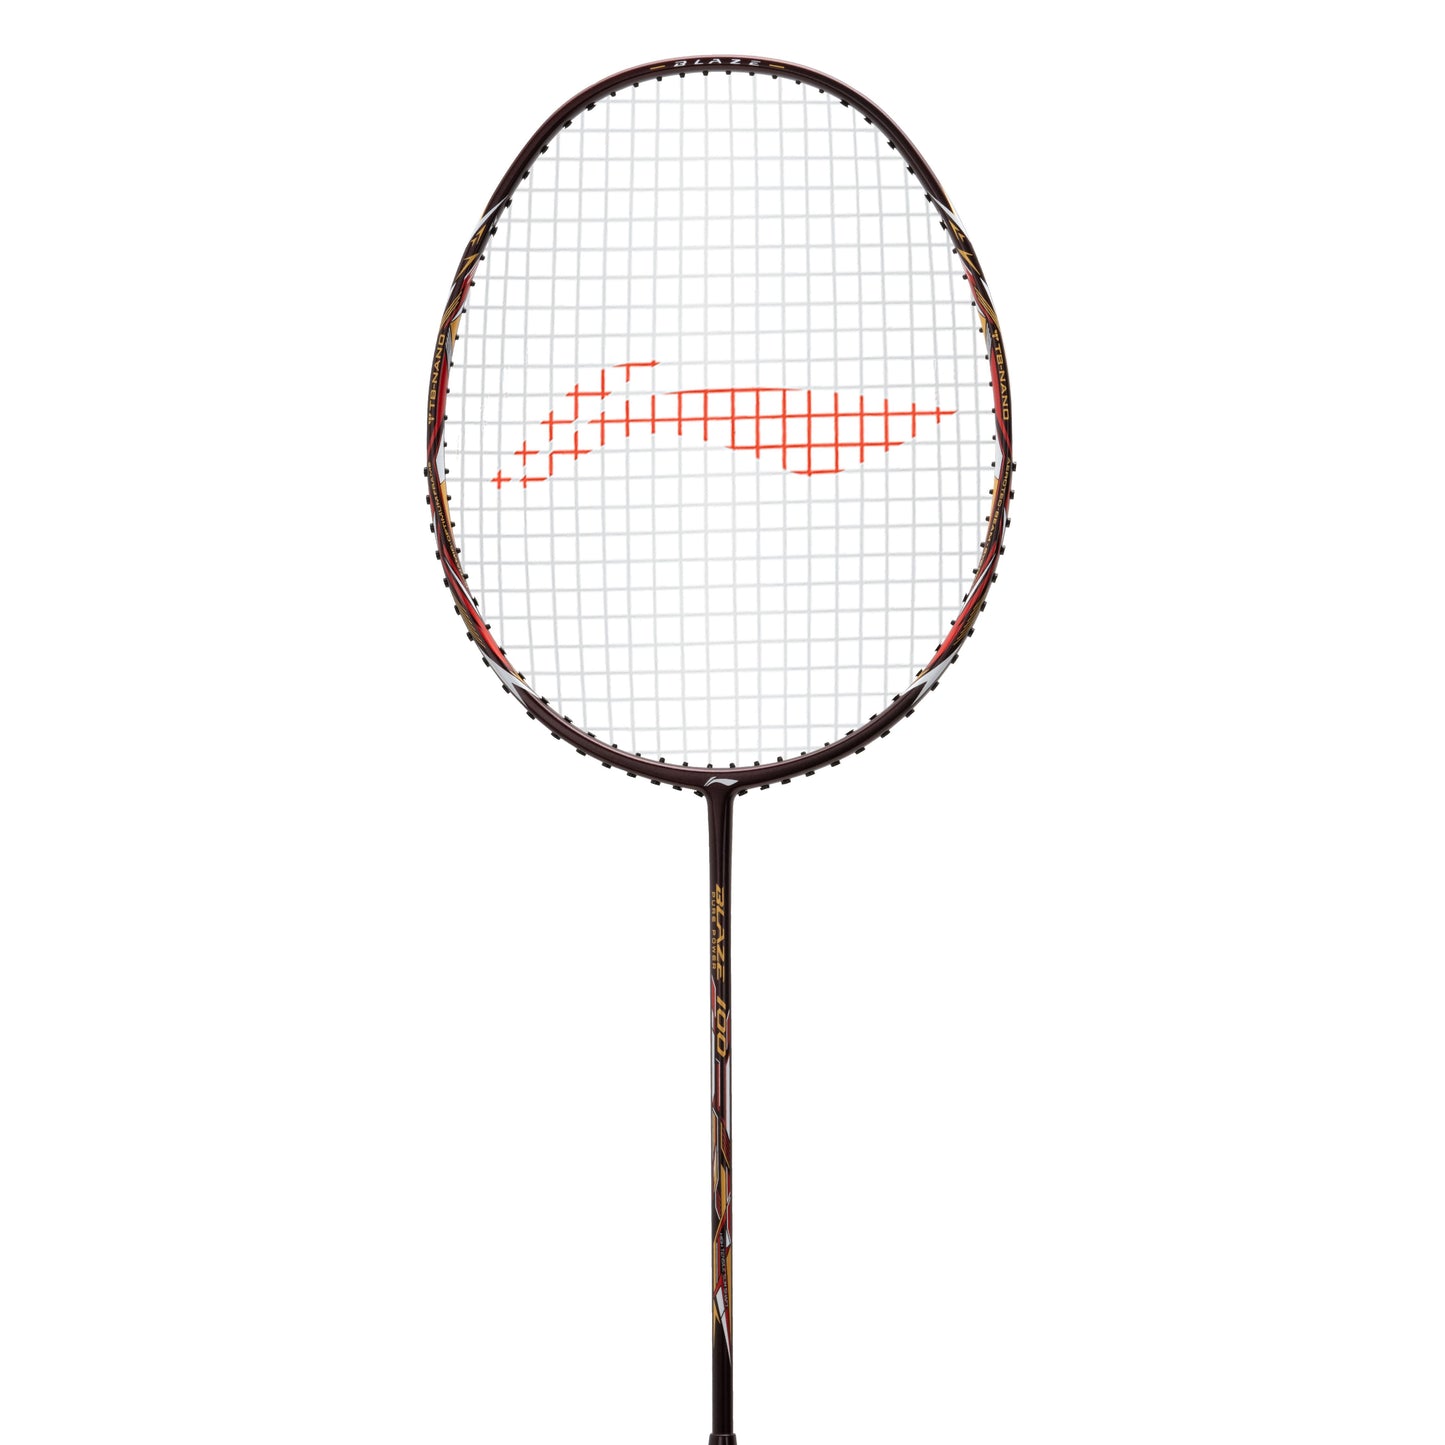 Li-Ning Blaze 100 Badminton Racket (Merlot/Gold/Red)